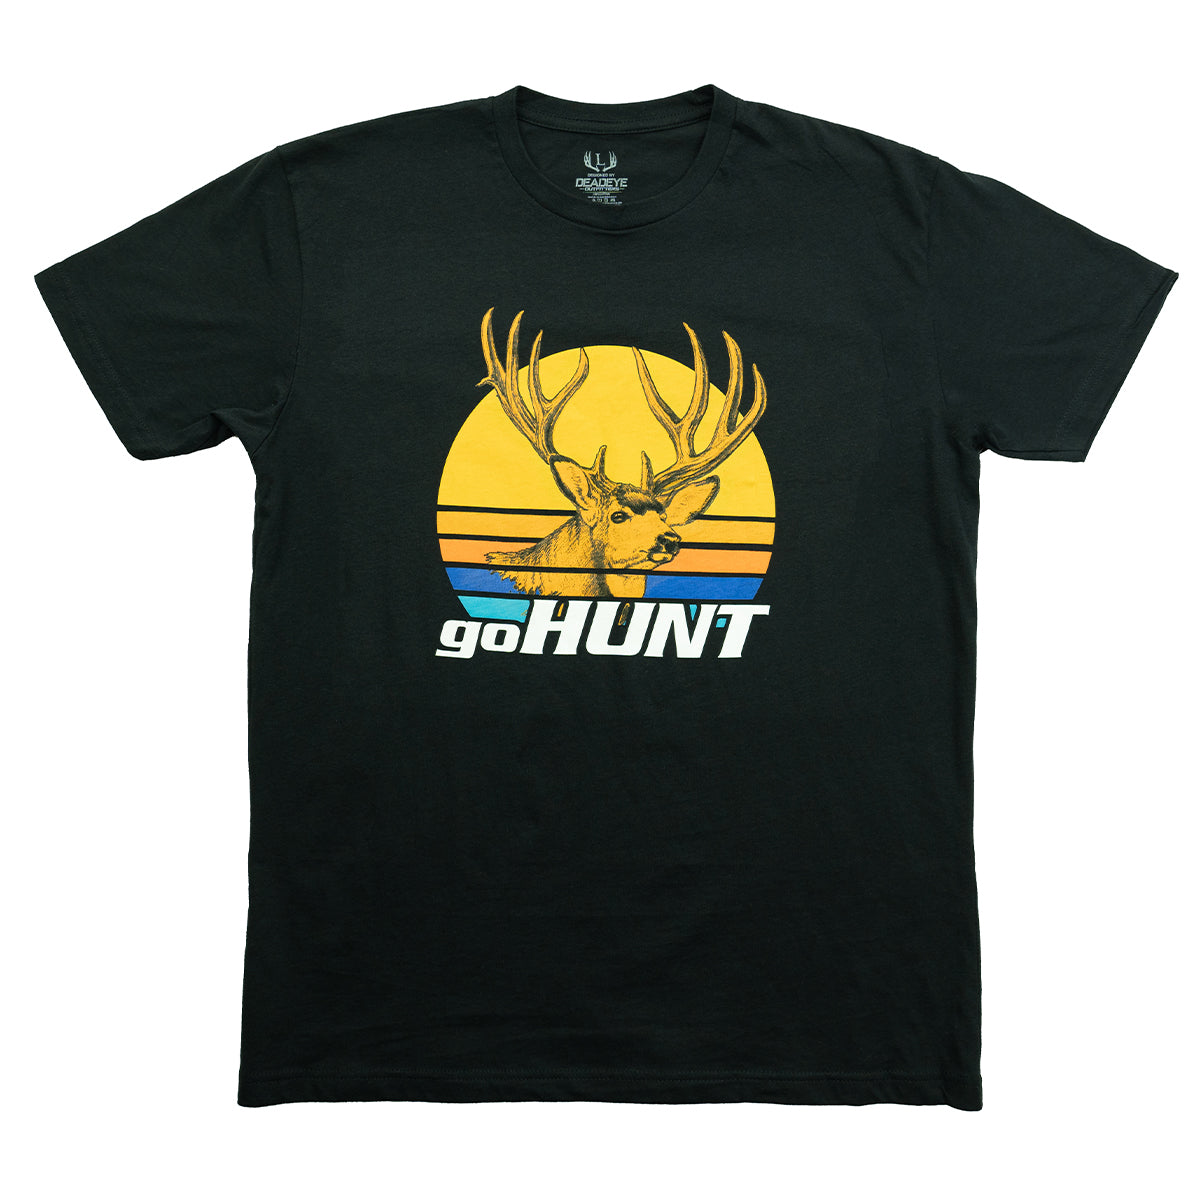 GOHUNT Nostalgia Muley T-Shirt in goHUNT Nostalgia Muley T-Shirt by goHUNT | Apparel - goHUNT Shop by GOHUNT | GOHUNT - GOHUNT Shop